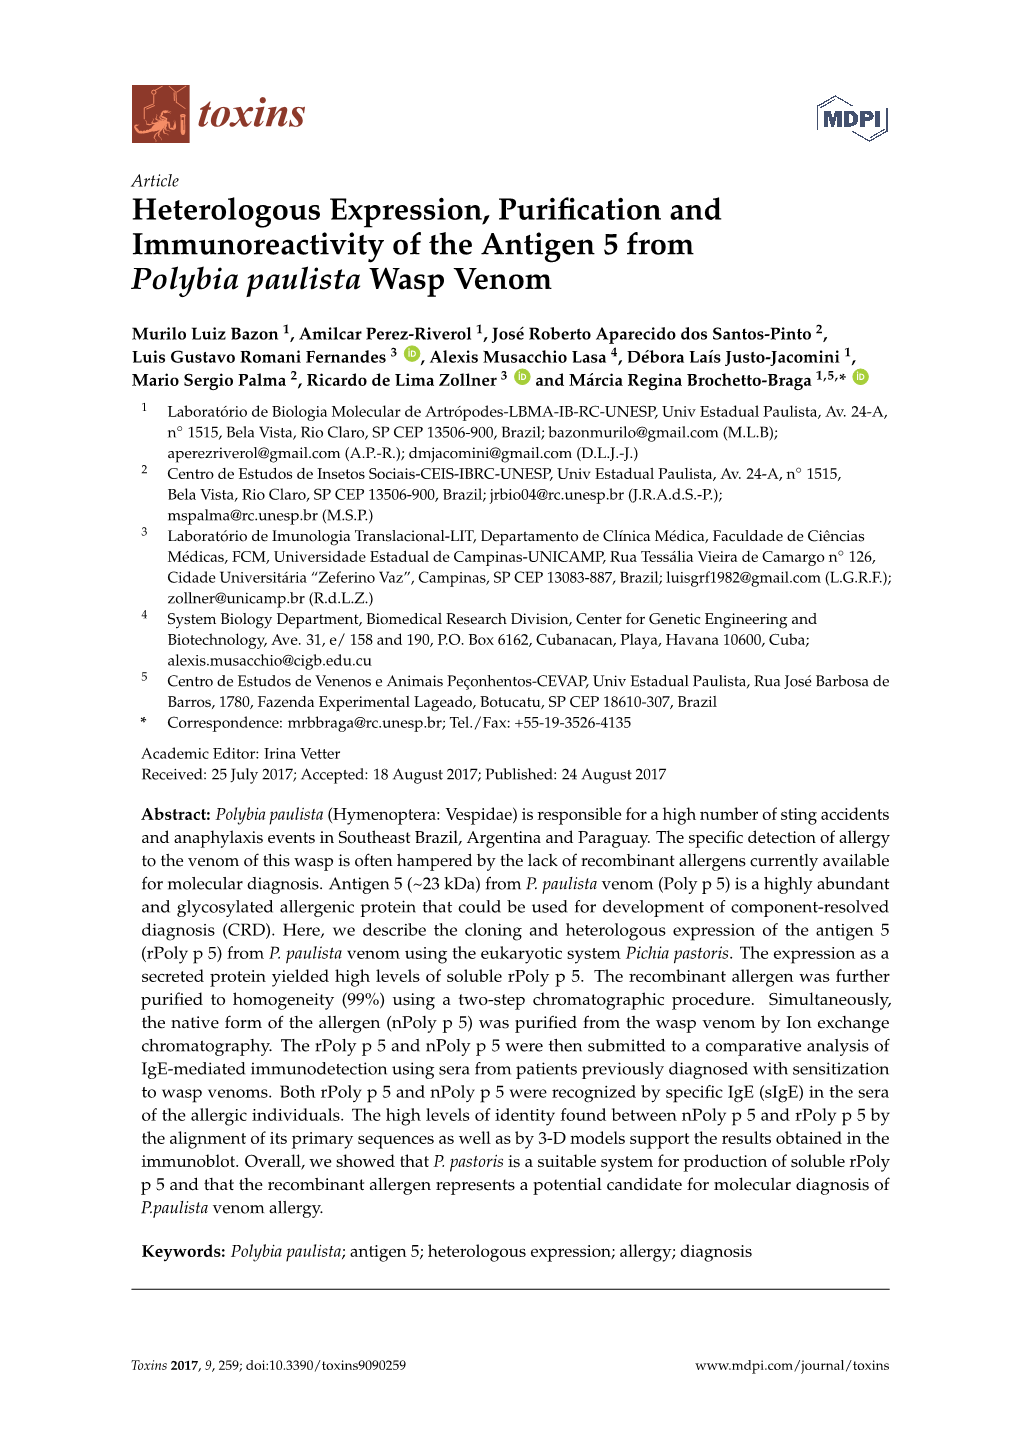 Heterologous Expression, Purification and Immunoreactivity of the Antigen